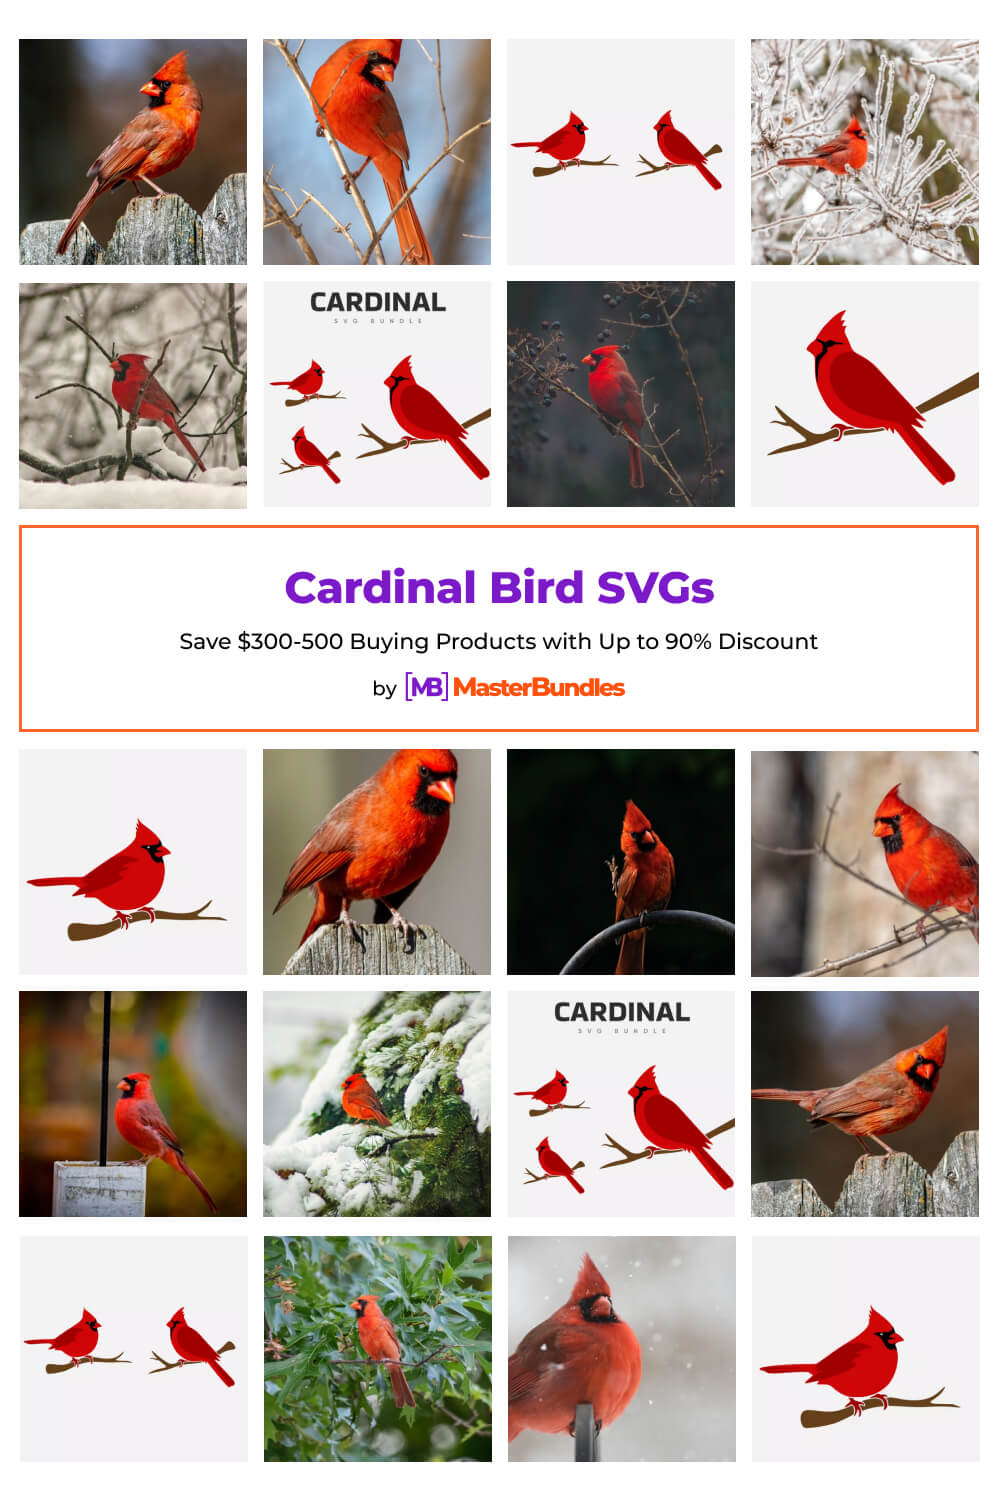 cardinal bird svgs pinterest image.